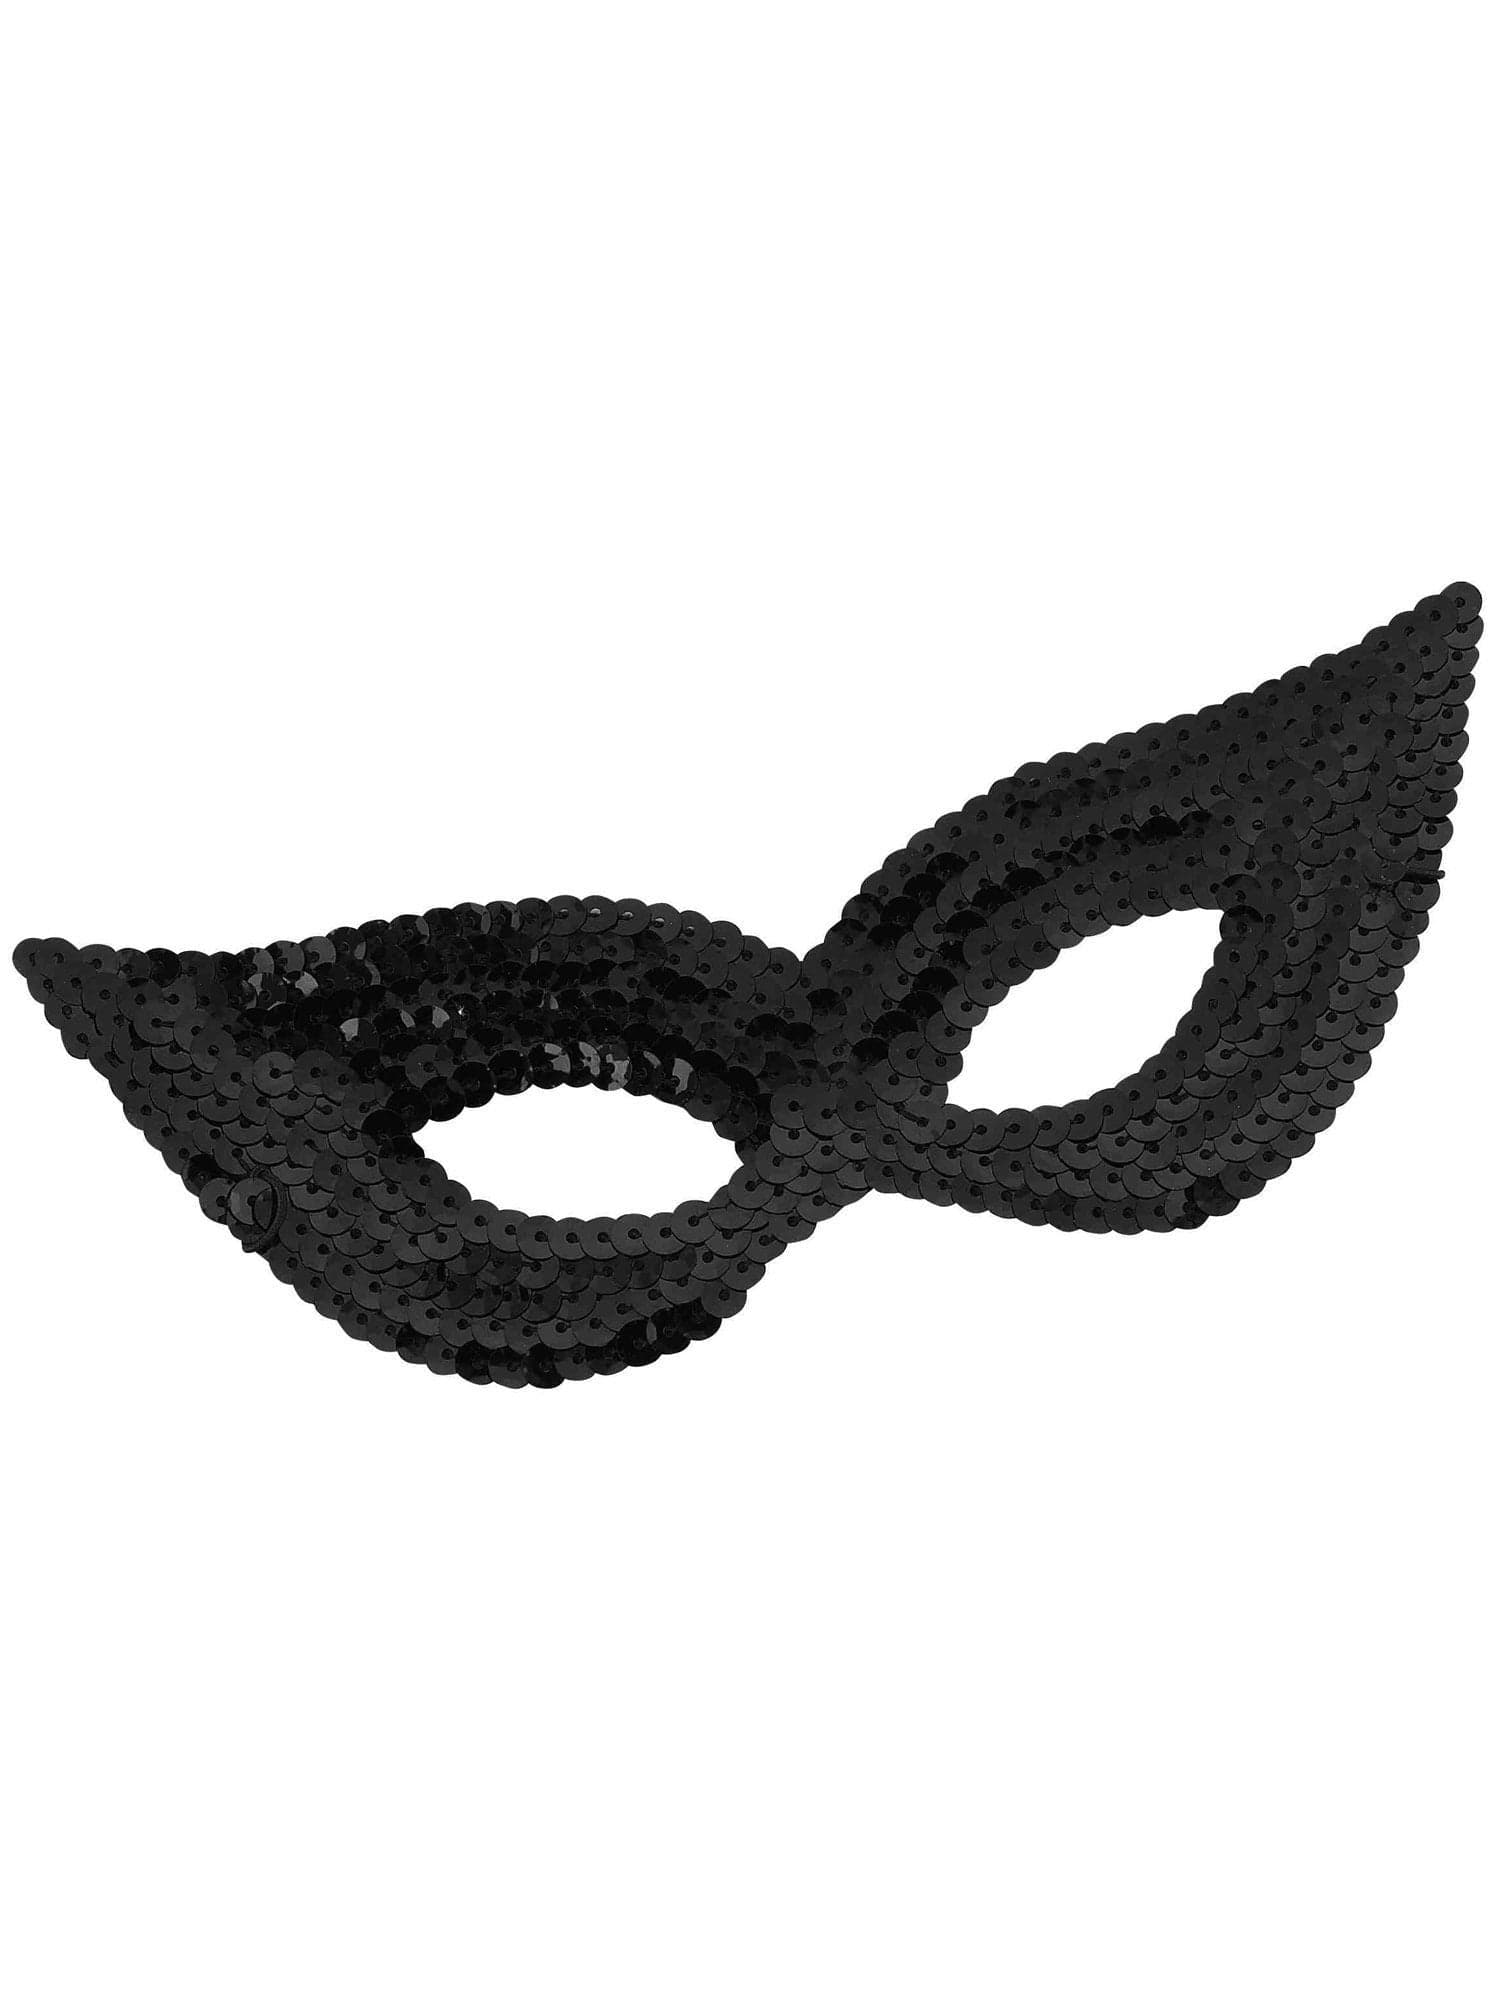 Black Sequin Eye Mask - costumes.com